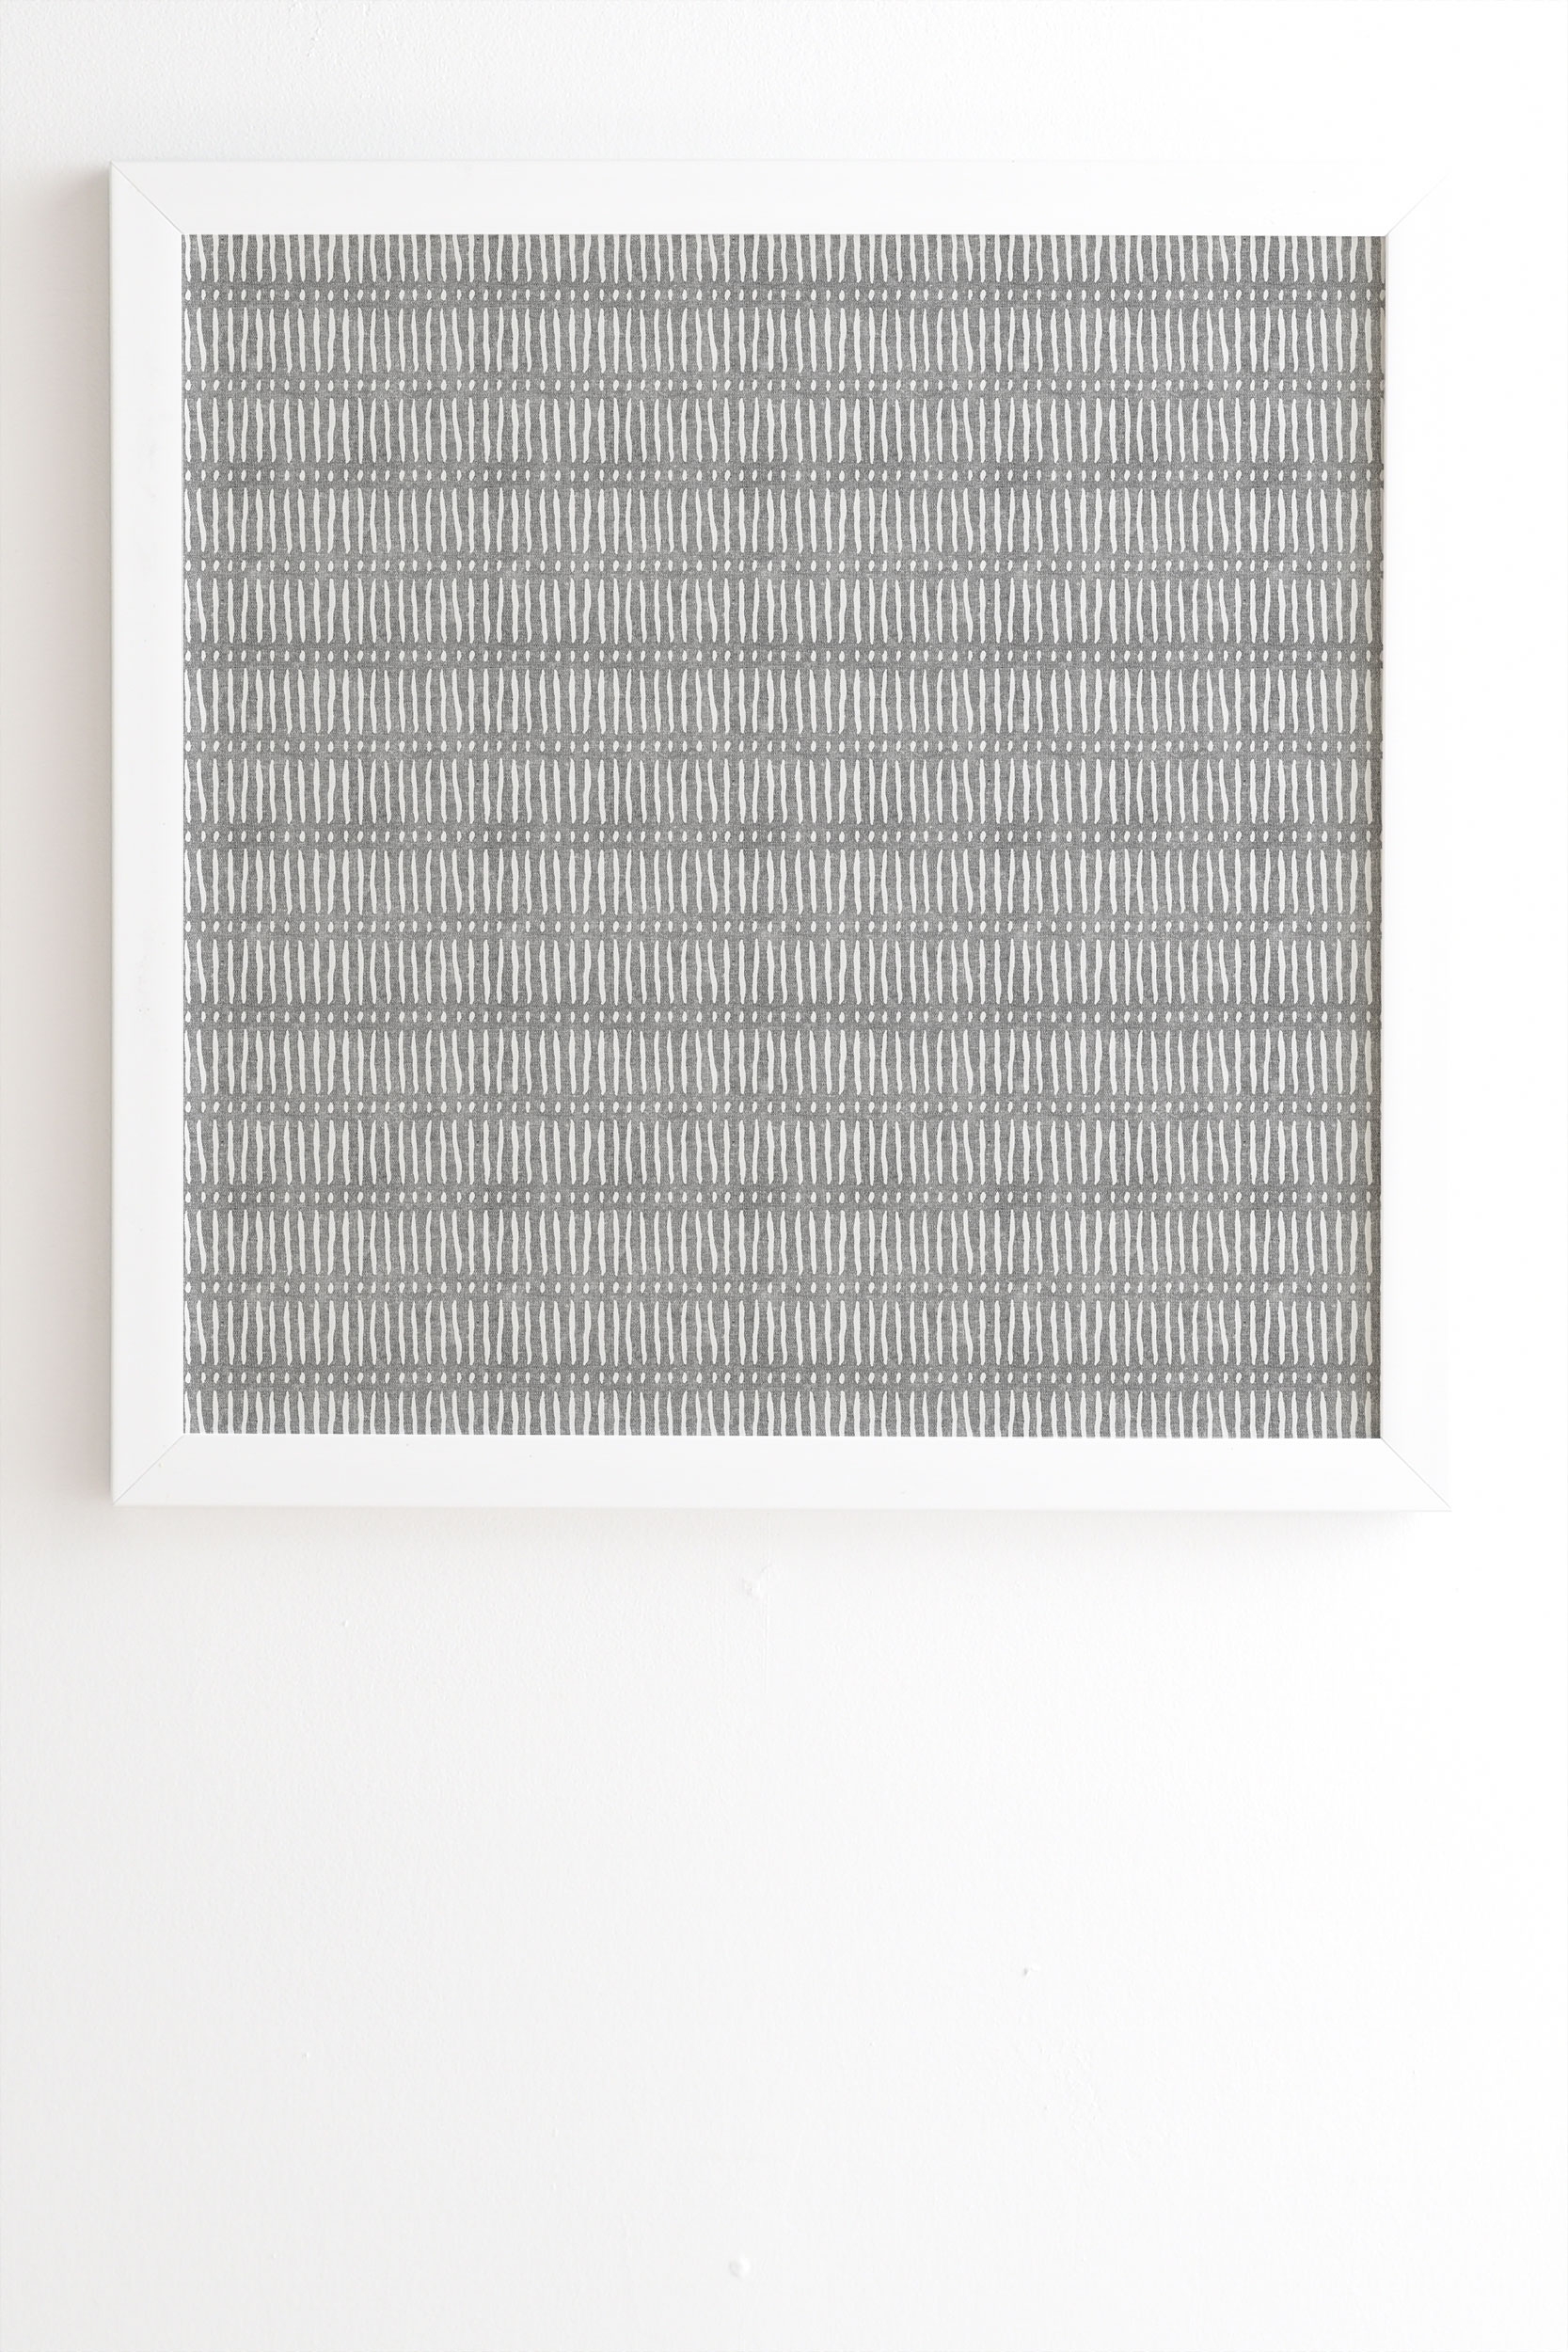 Mud Cloth Dash Gray by Little Arrow Design Co - Framed Wall Art Basic White 30" x 30" - Image 1